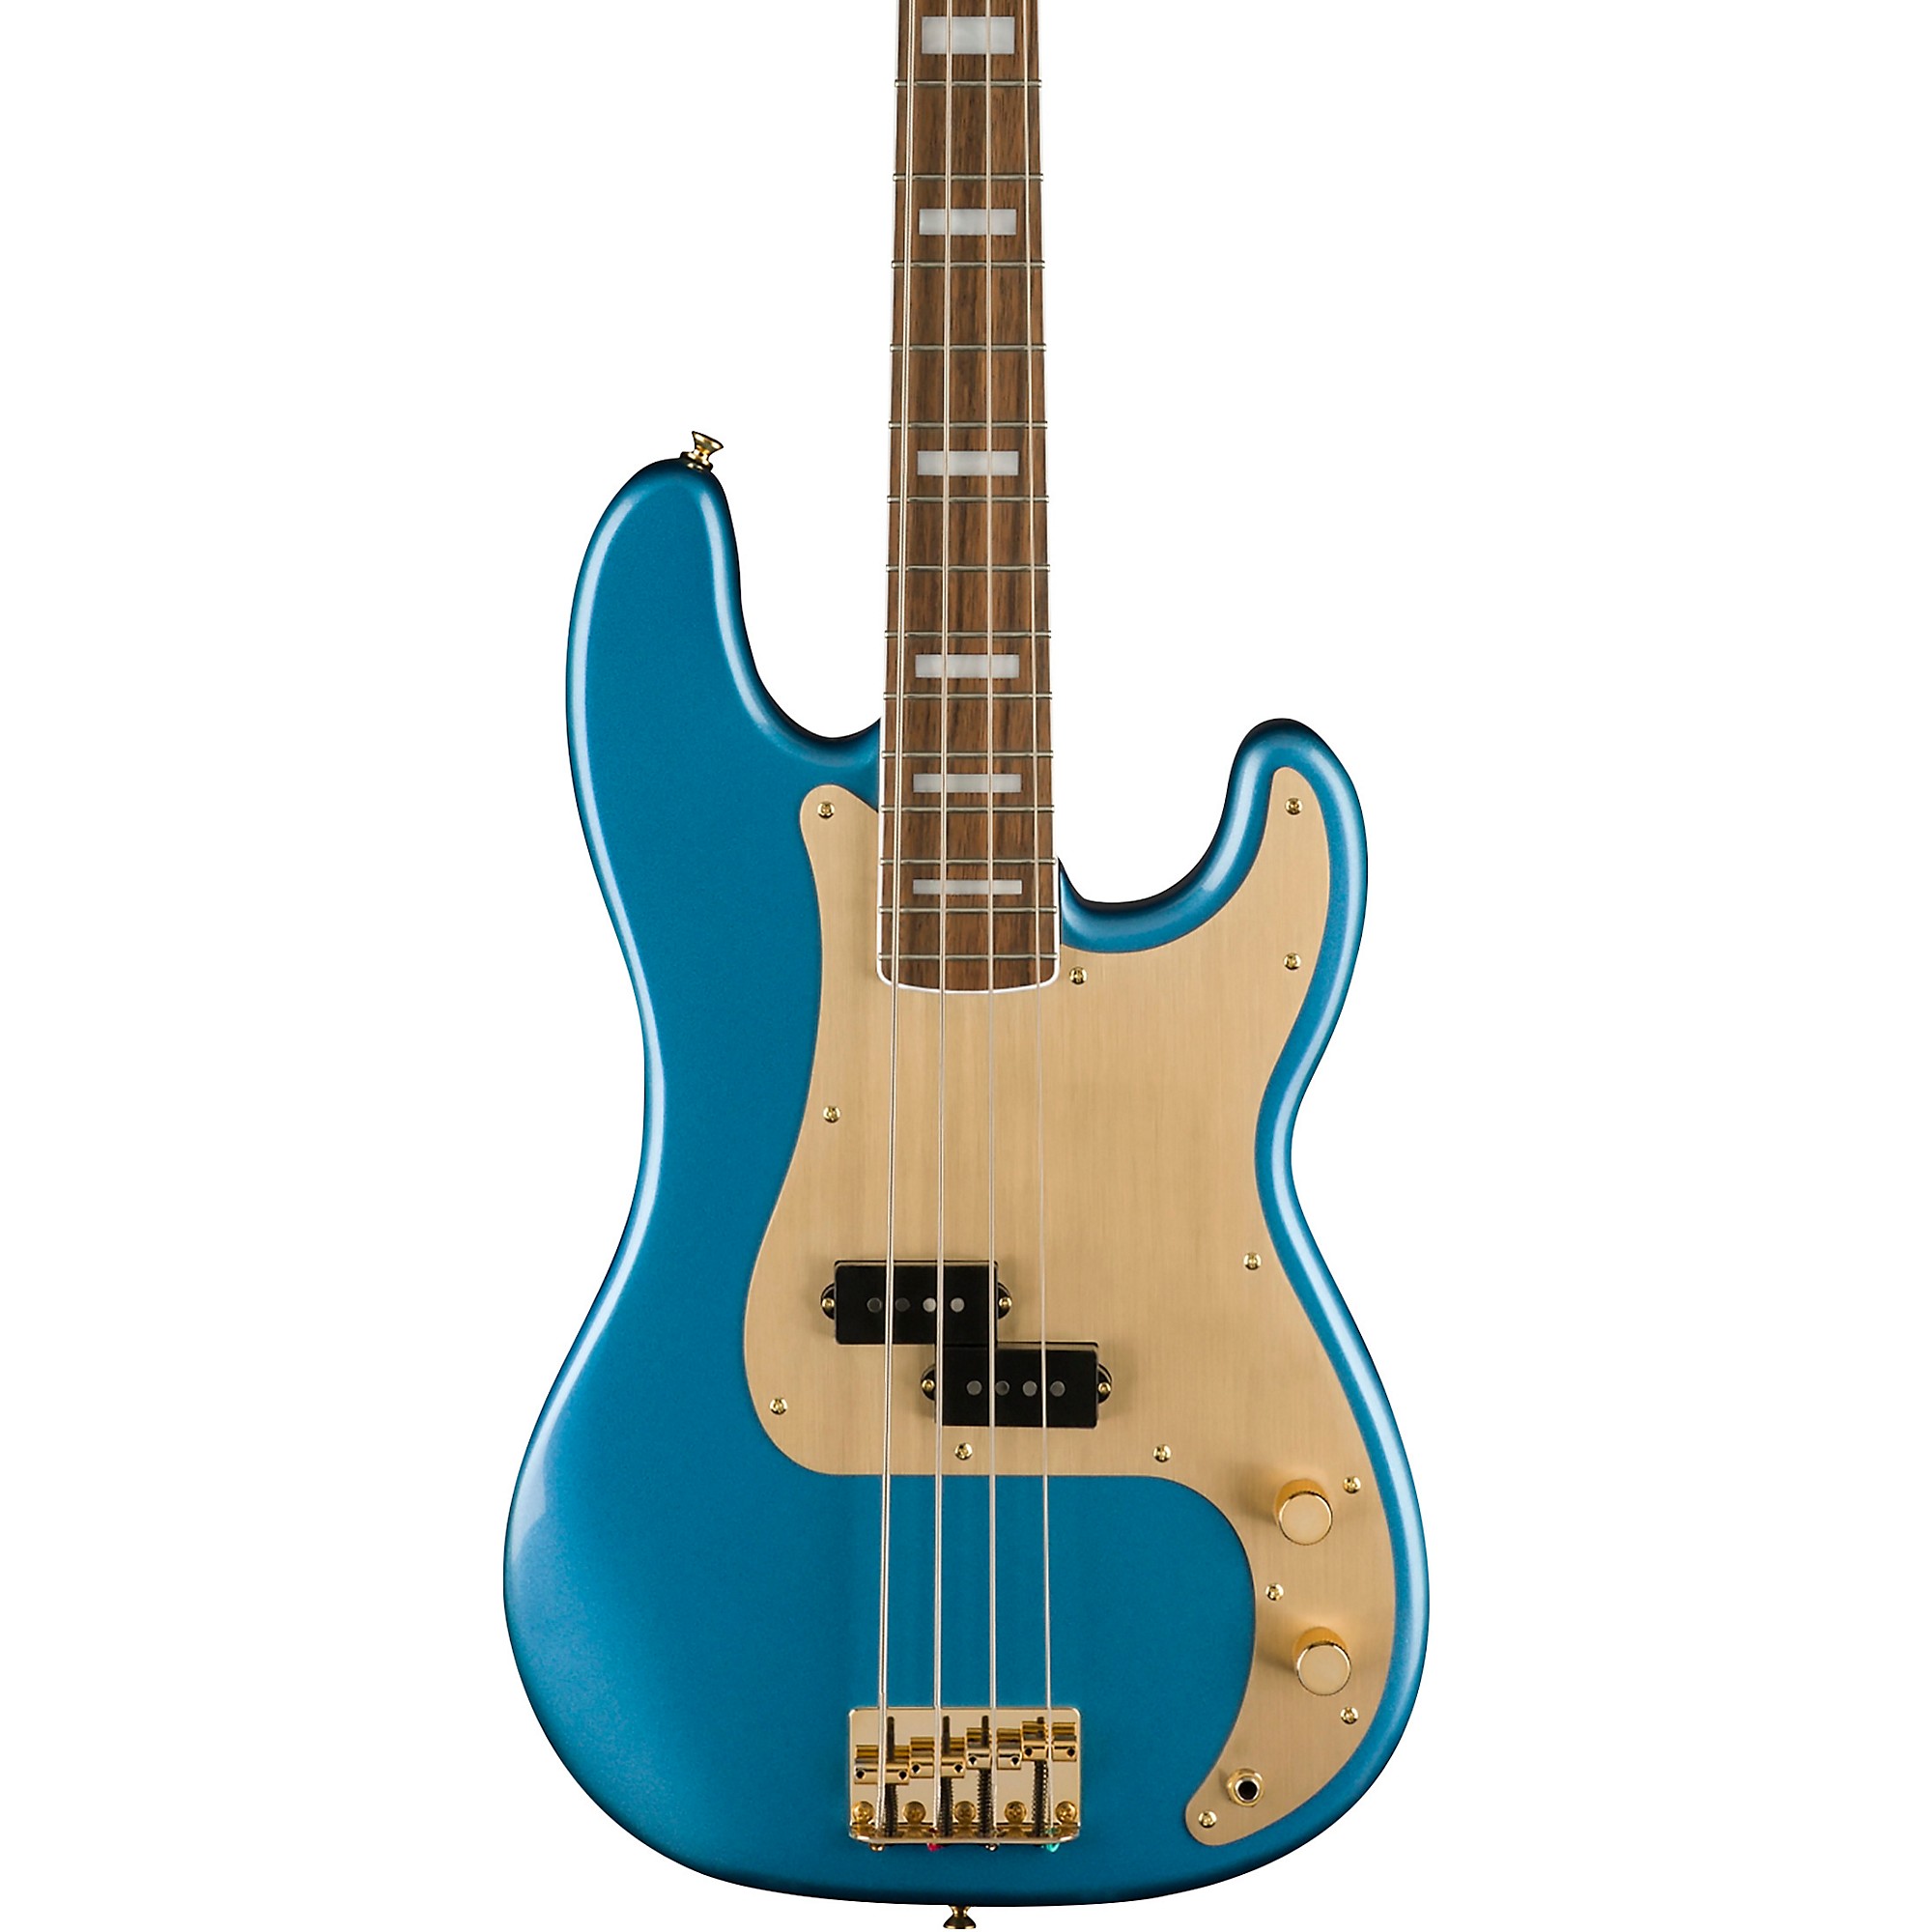 Lake Placid Blue Fender 15' Original Instrument Cable for Electric/Bass Guitar & Electric Mandolin 